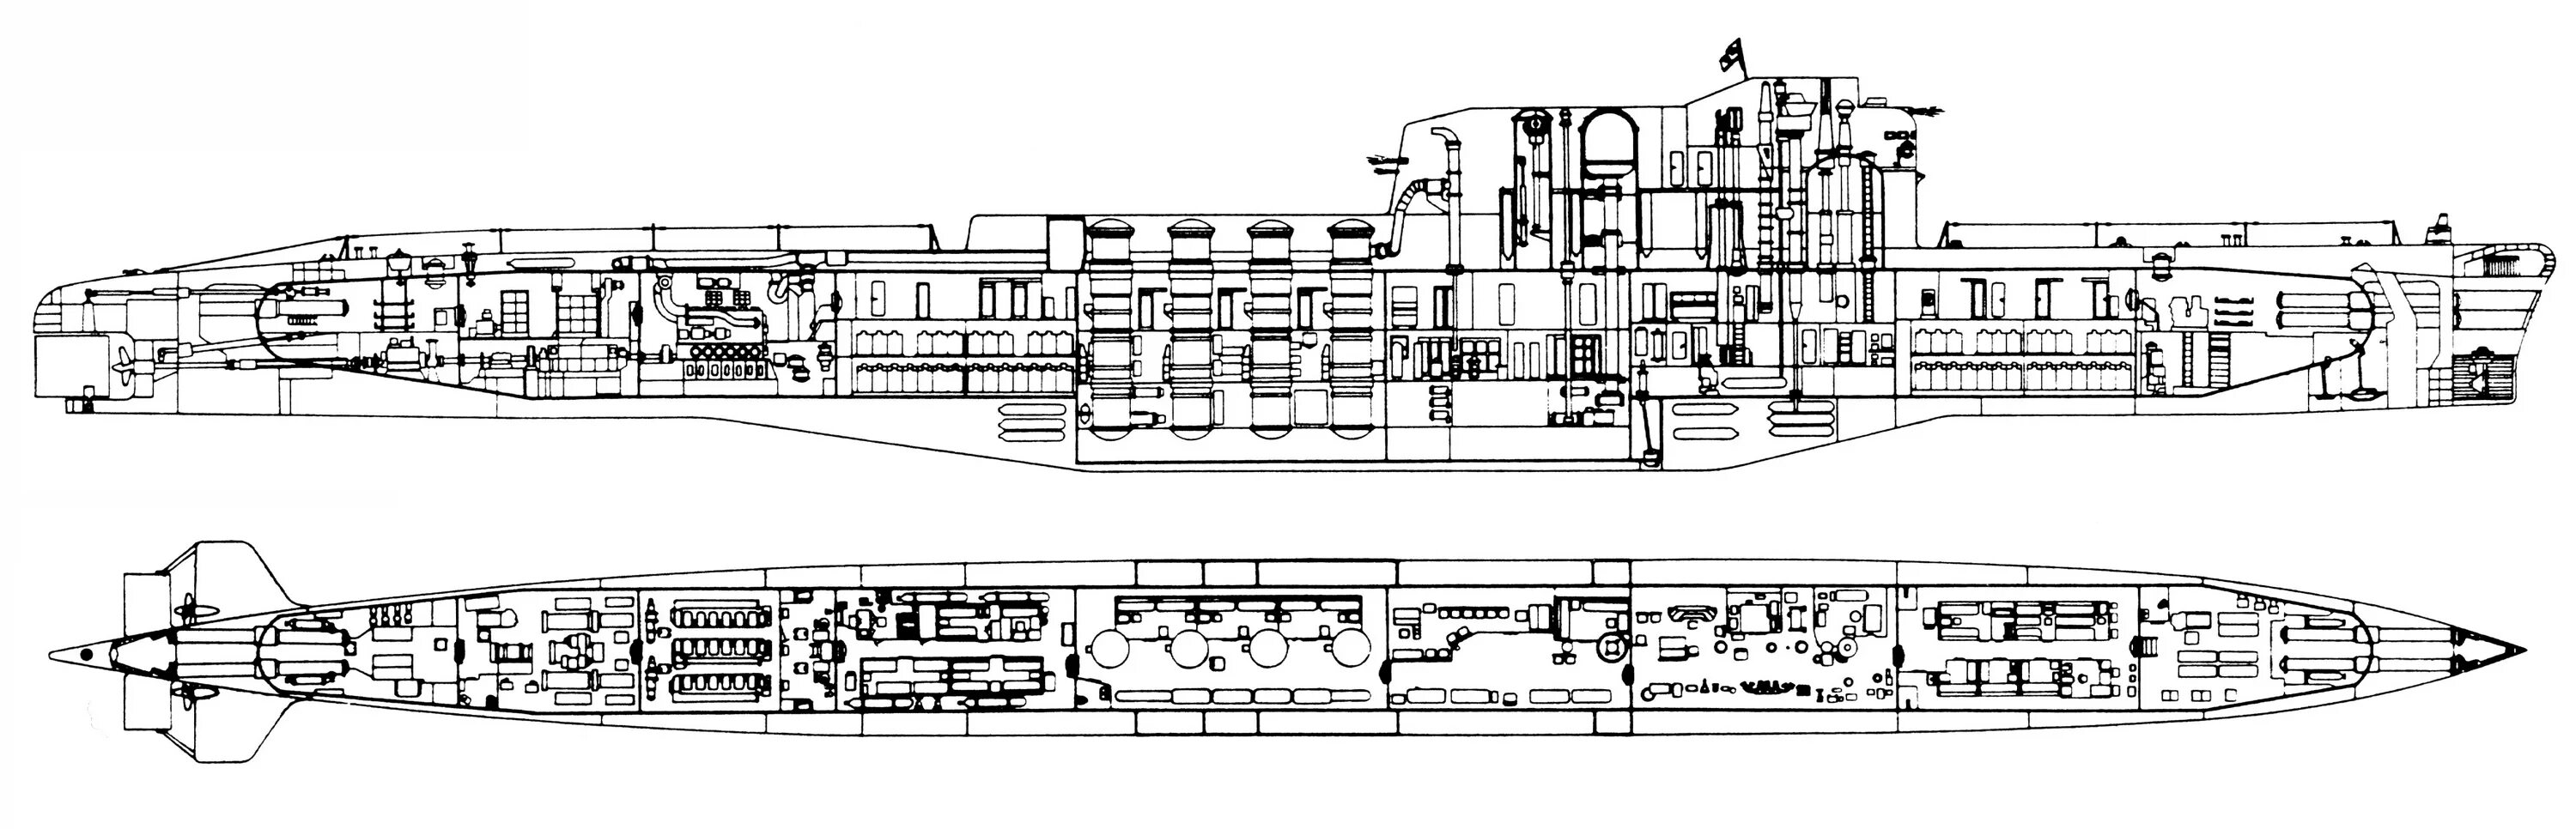 Пл чо шп онаж. Проект 1123 Кондор чертежи. Пл пр 641 чертежи. Подводная лодка проект 629 БС 107. Подводная лодка проекта 641 схема.